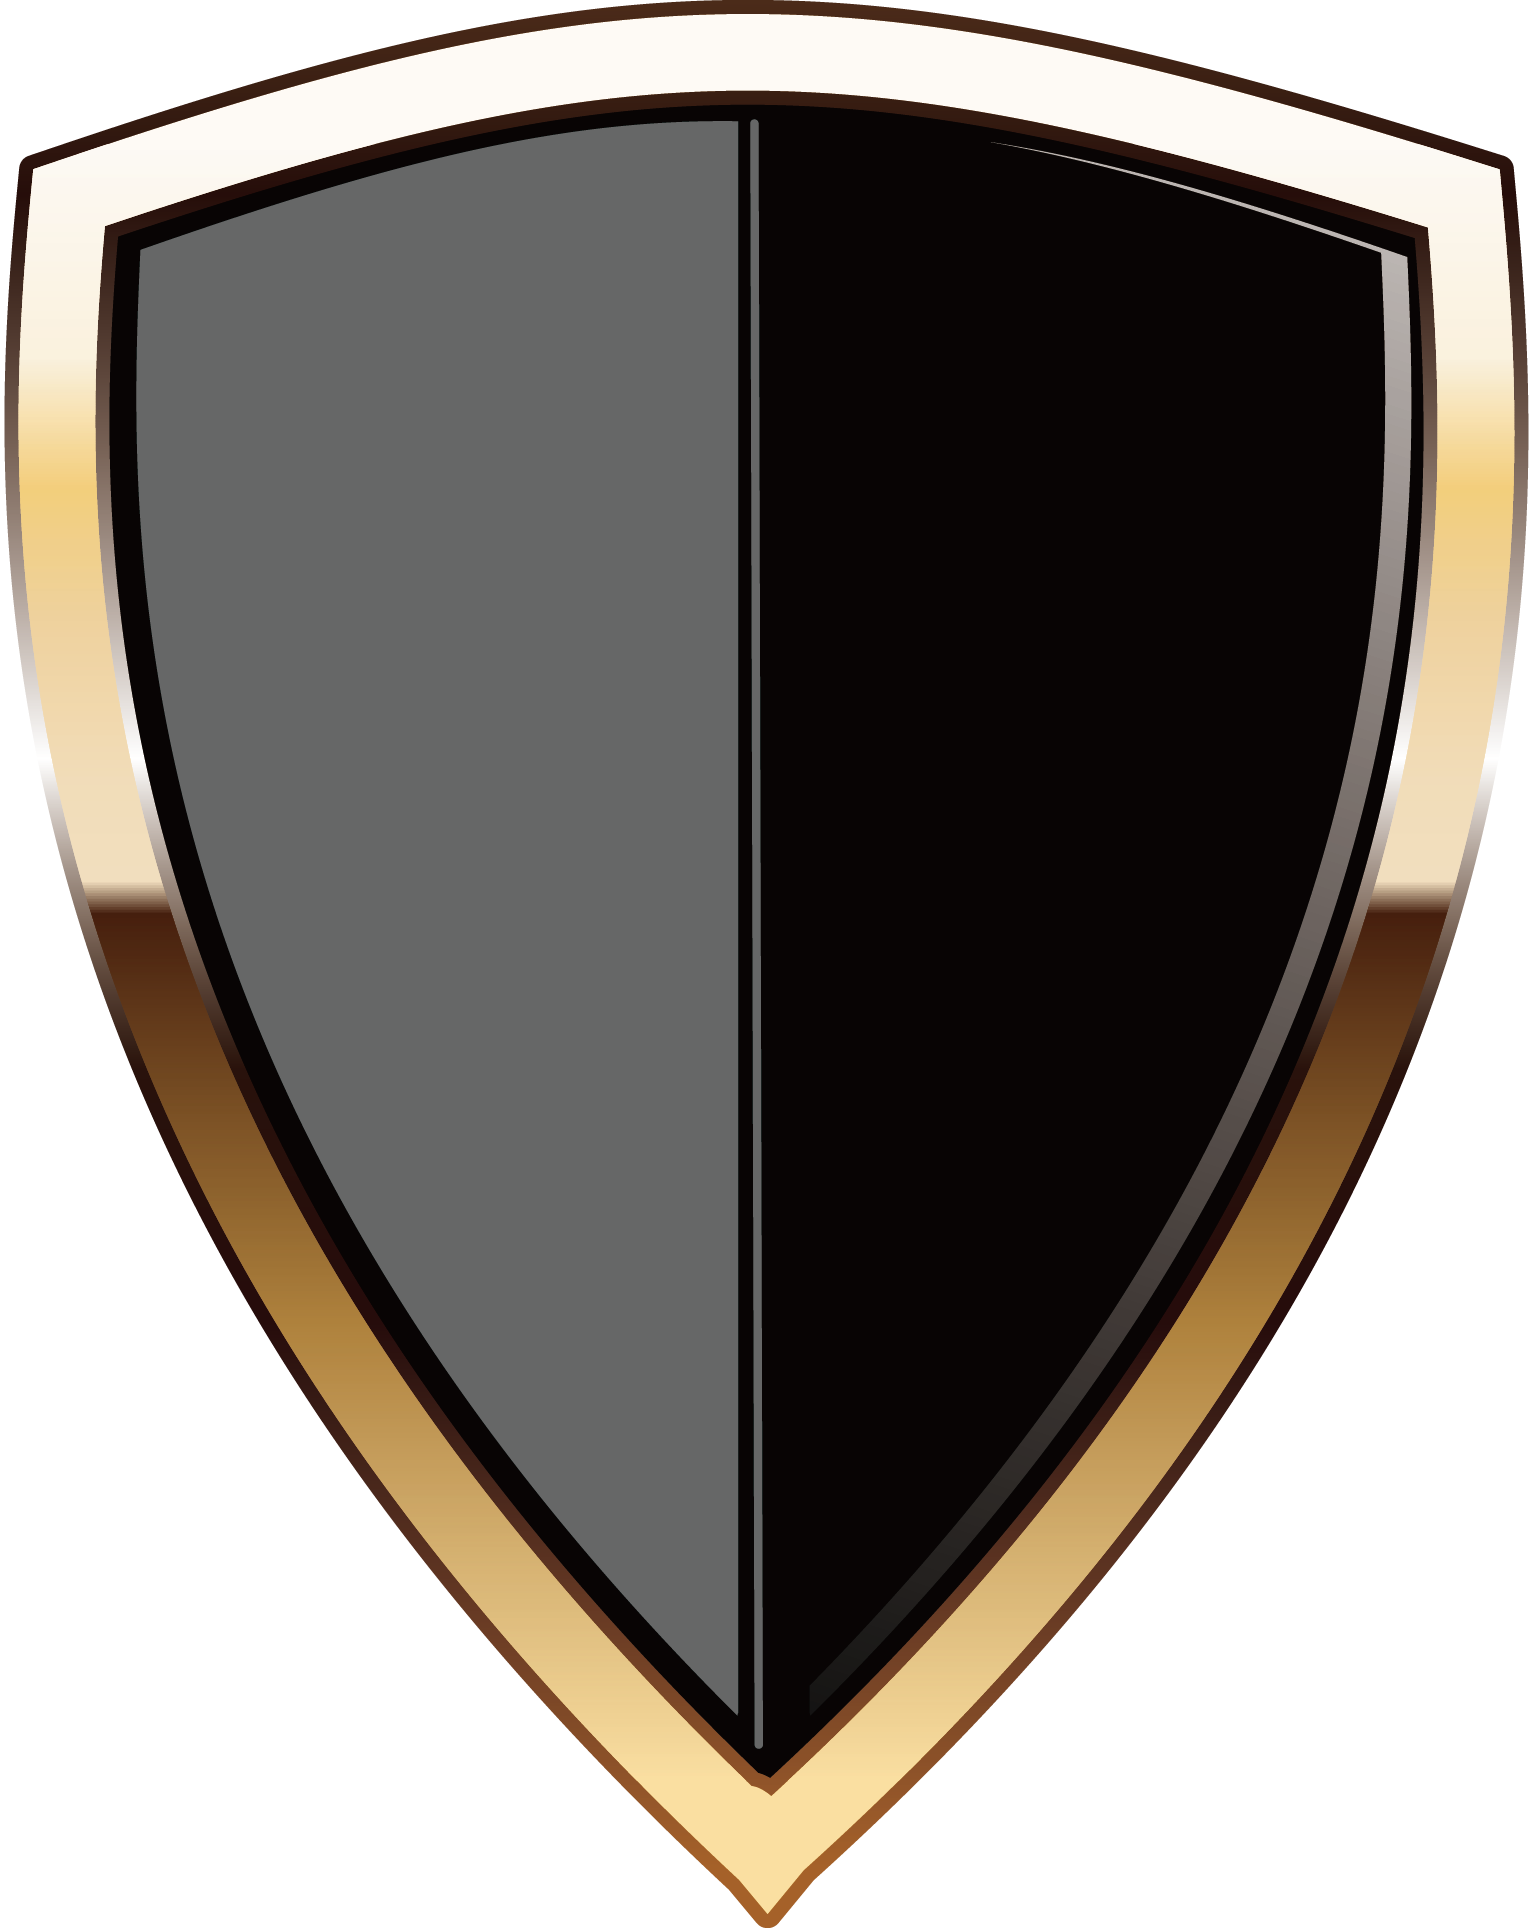 the shield logo